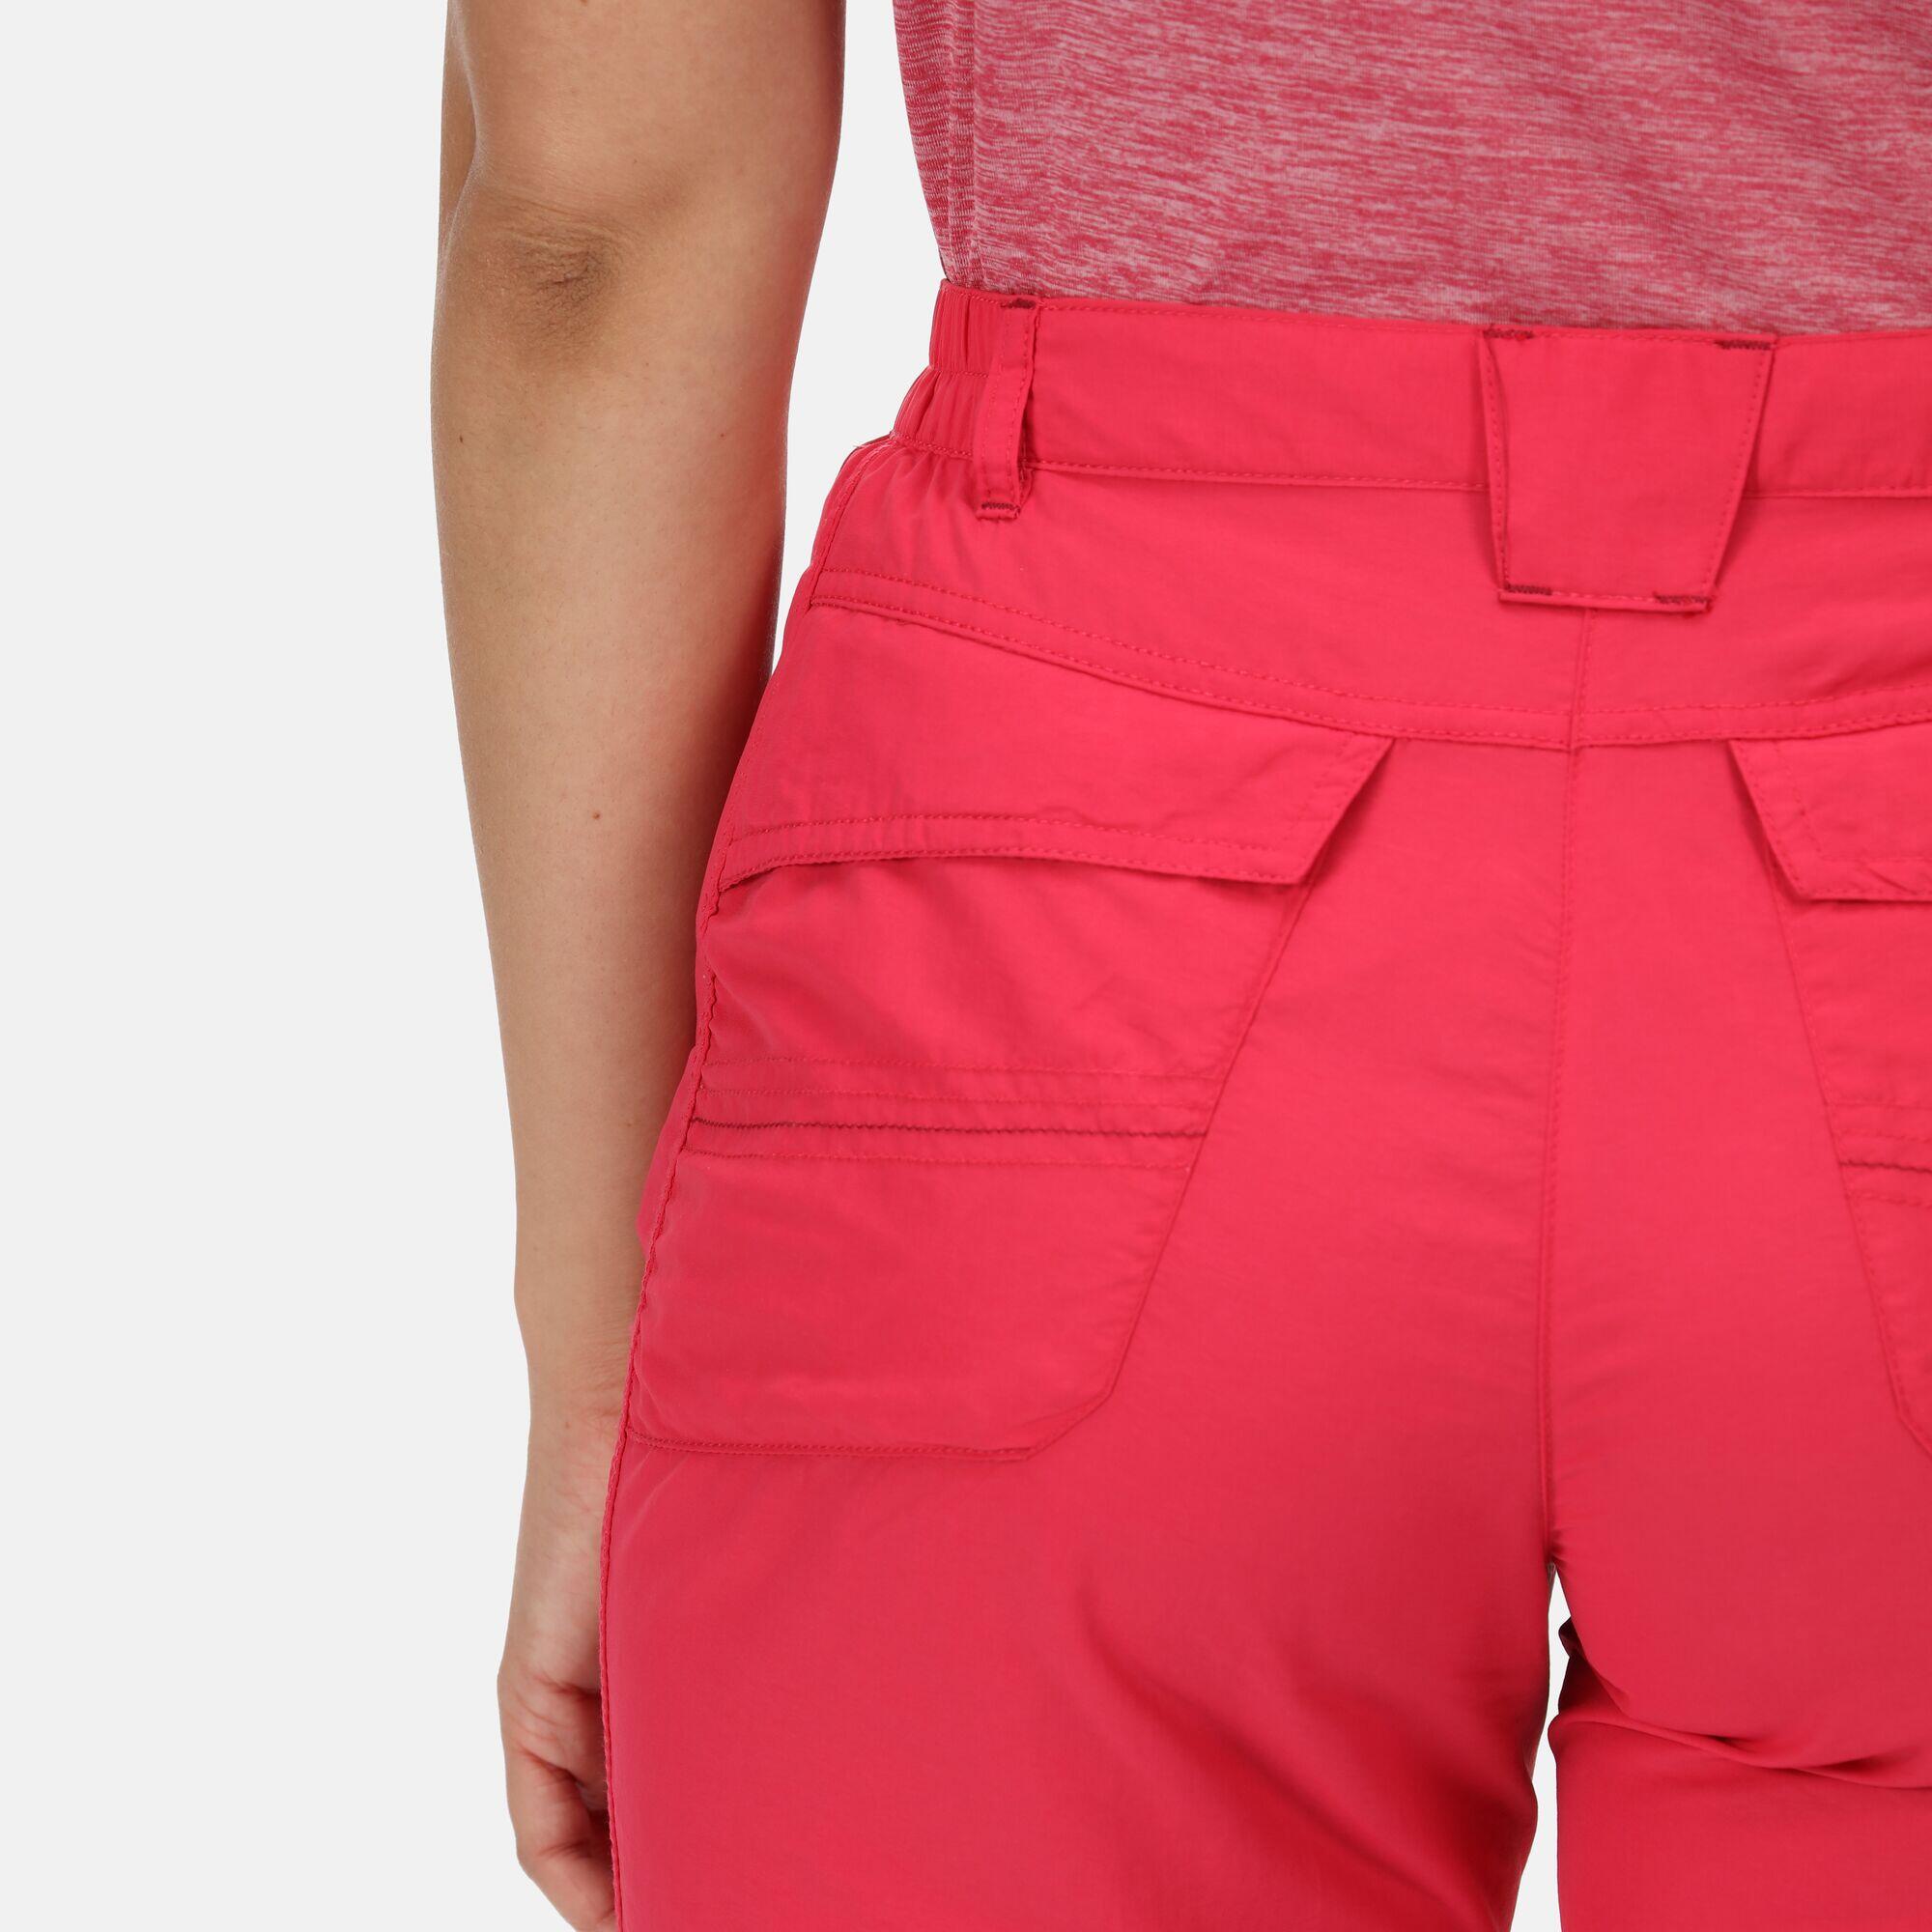 Chaska II Women's Hiking Shorts - Rethink Pink 4/6